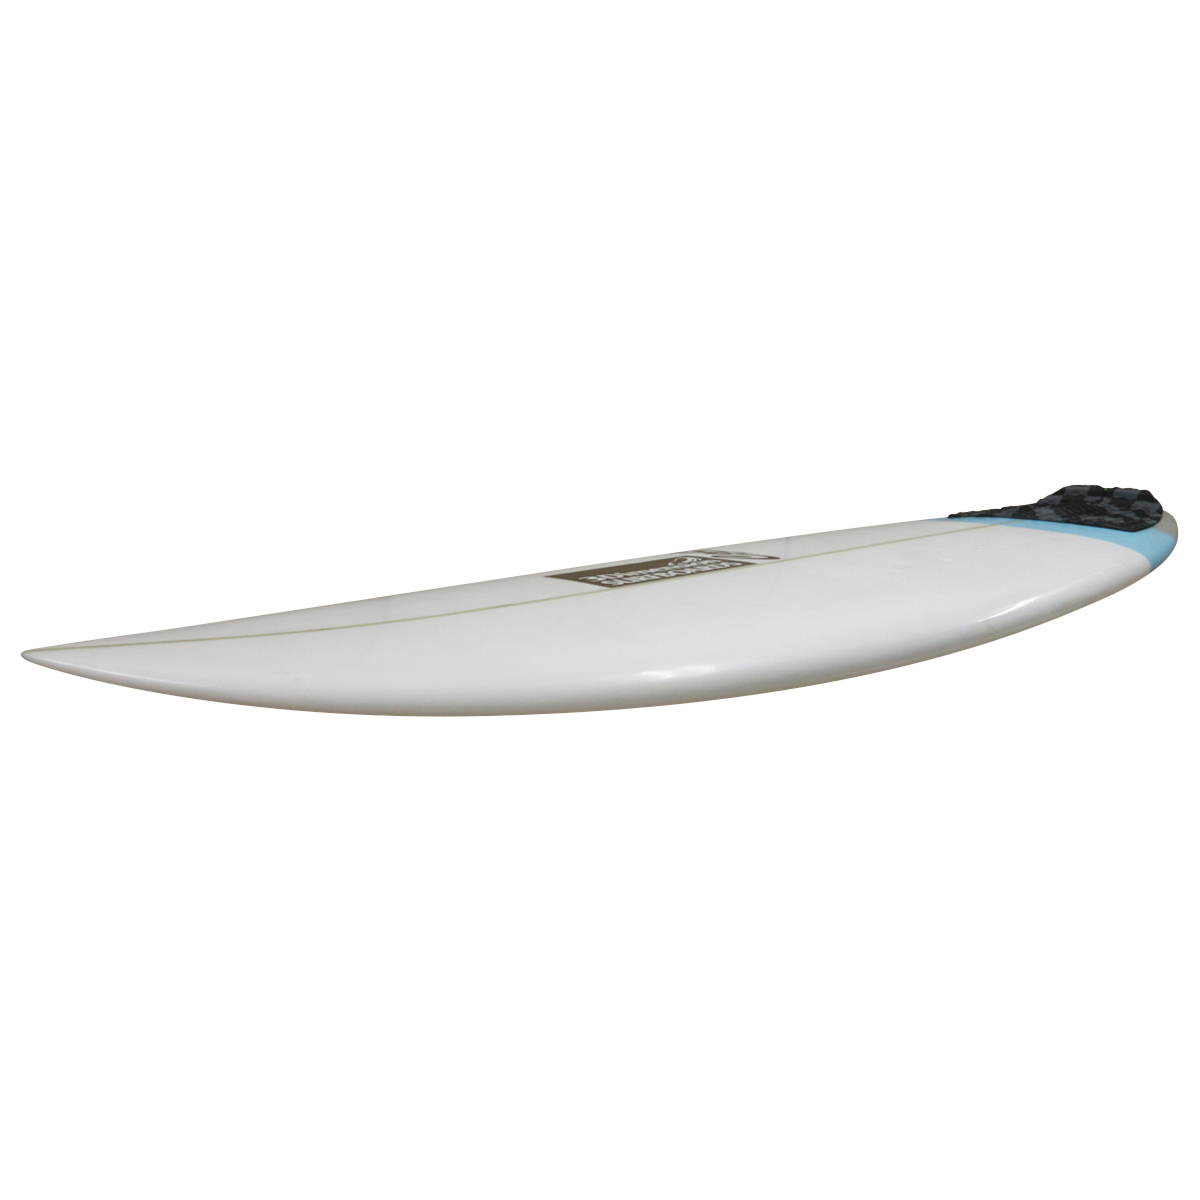 3Dimension Surfboards / Pancake 5'8